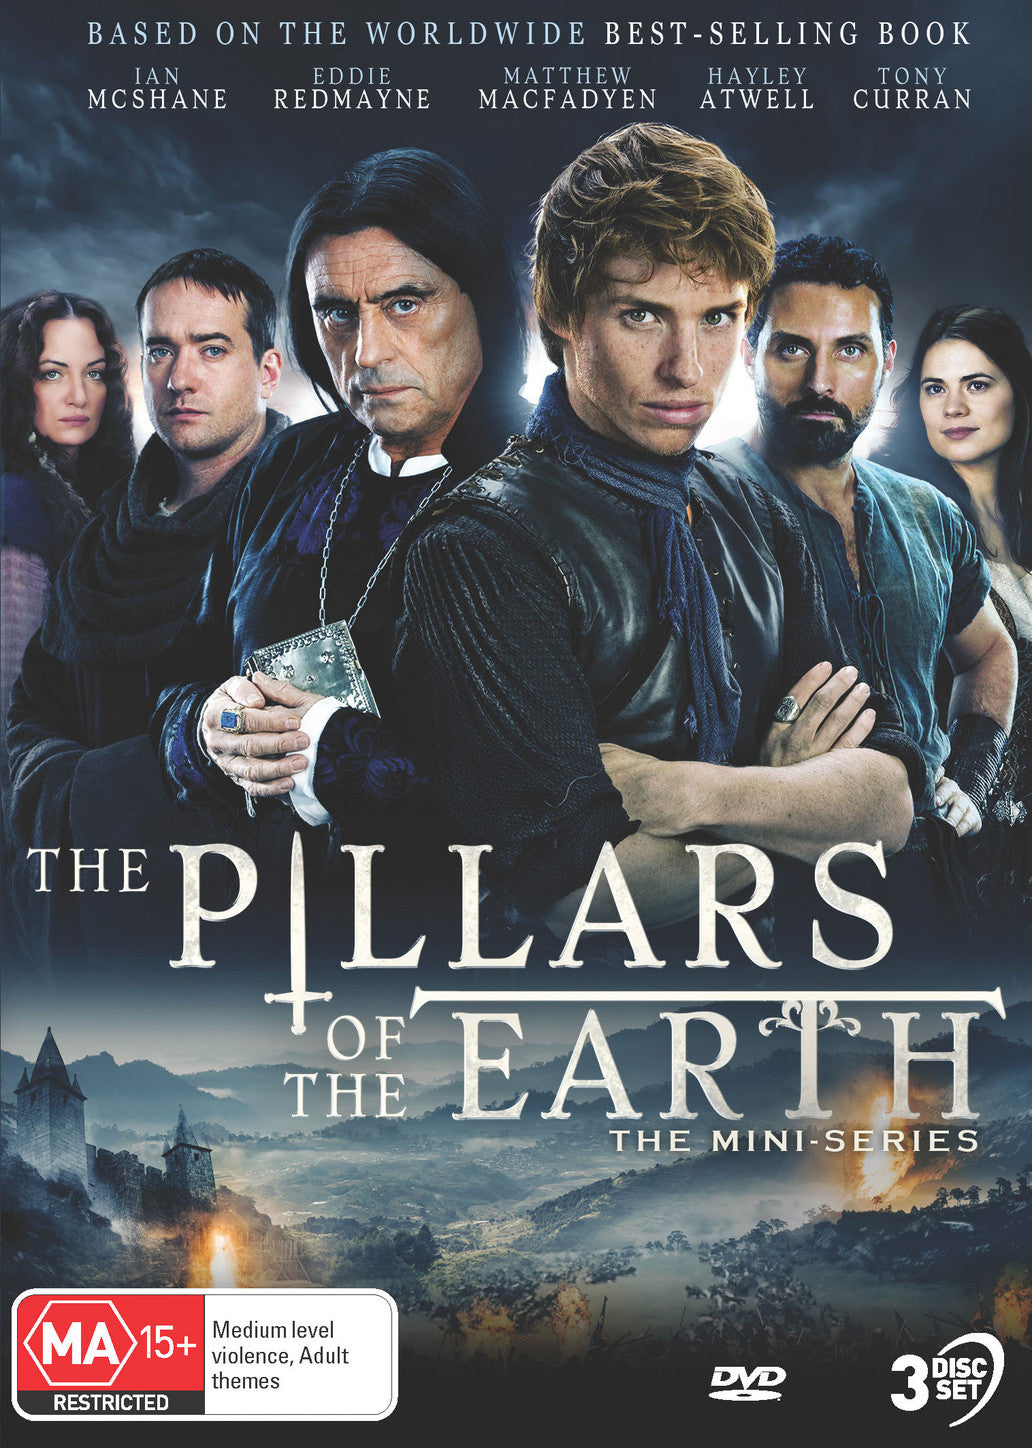 THE PILLARS OF THE EARTH: THE MINI-SERIES - DVD